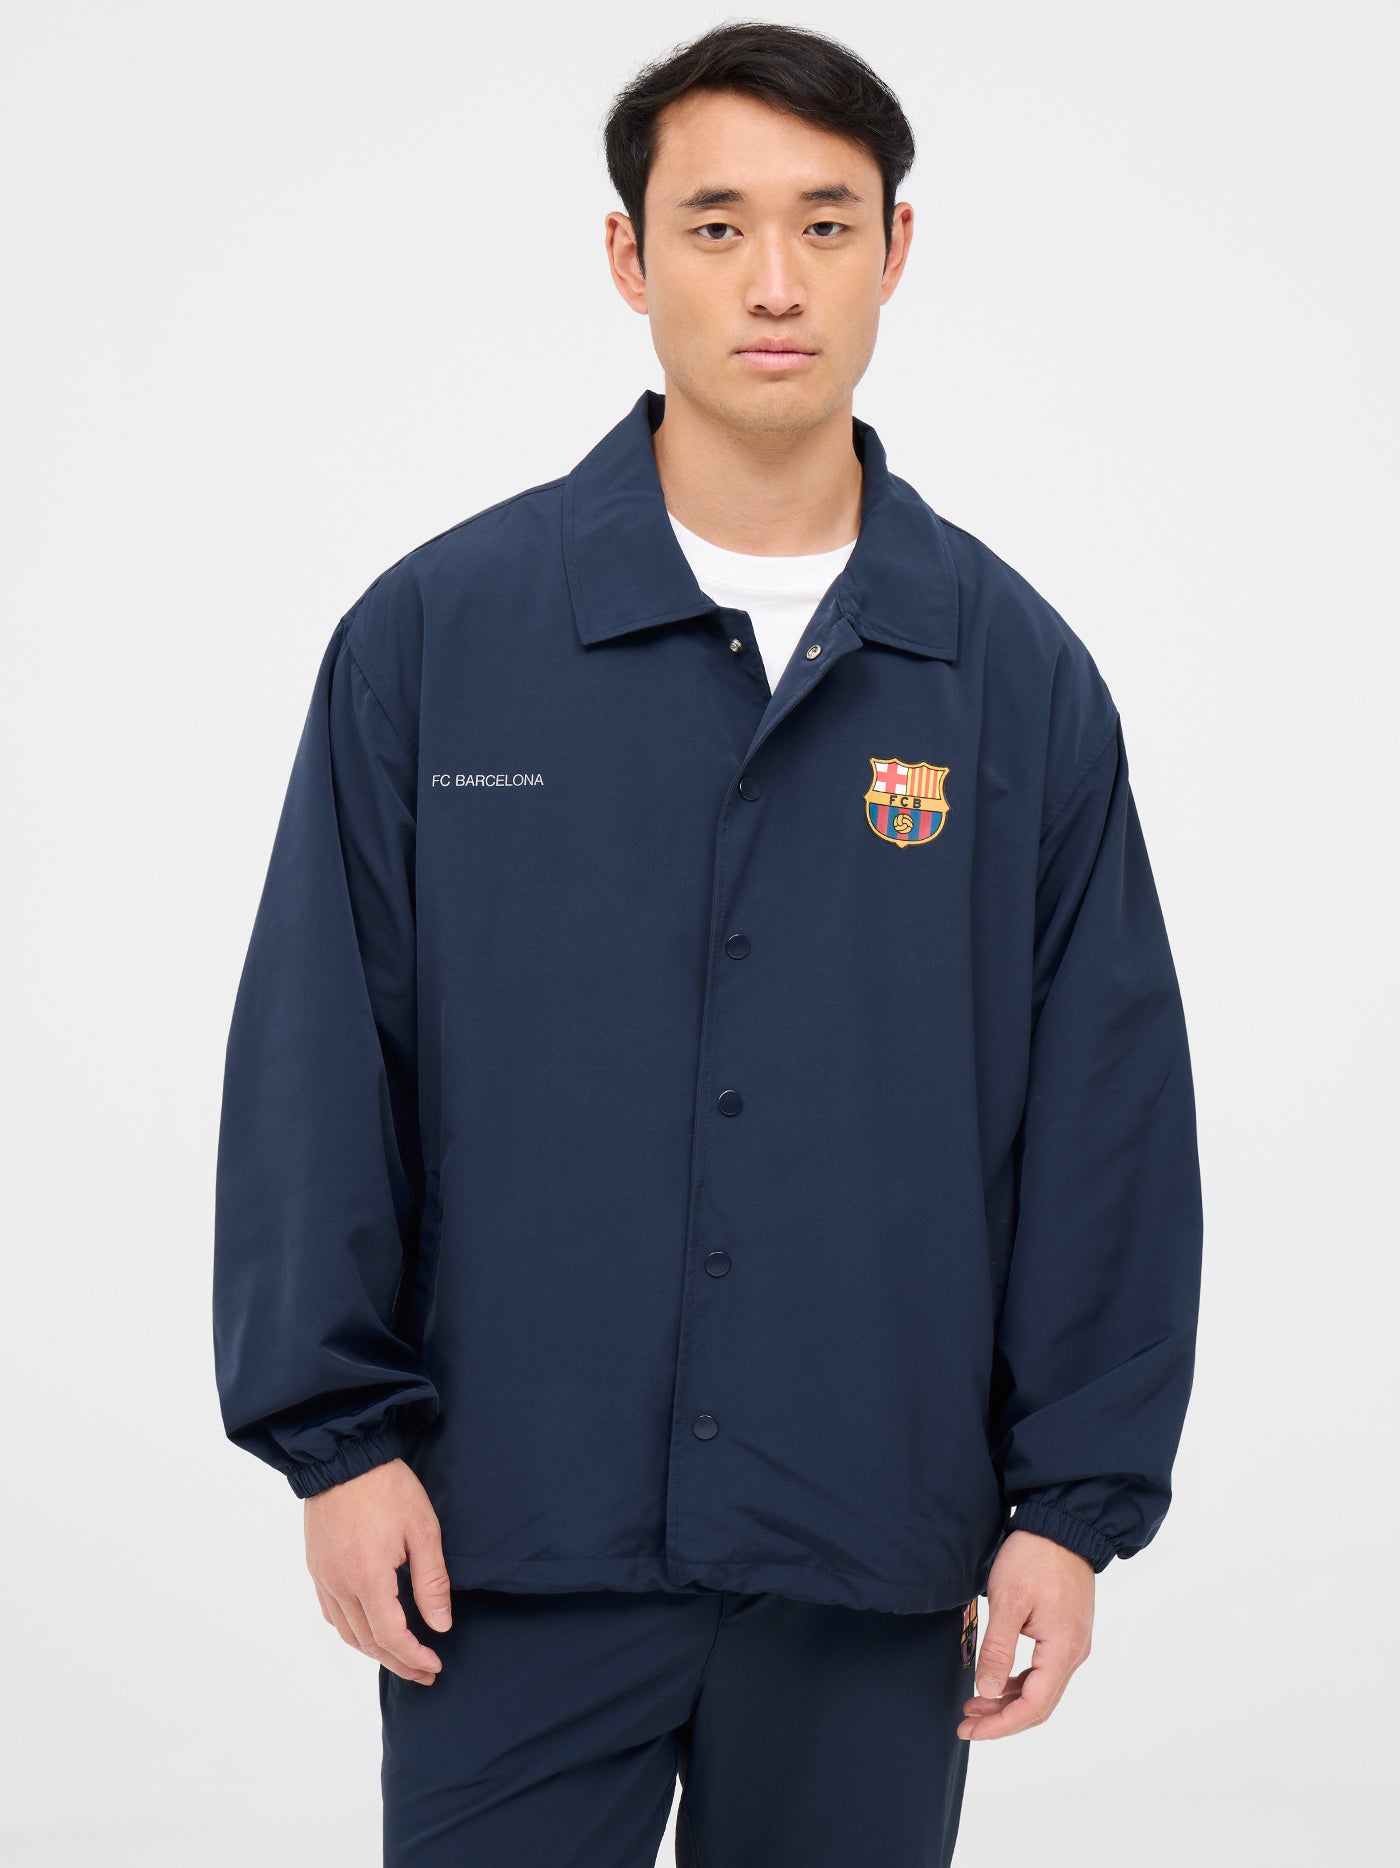 FC Barcelona buttoned jacket